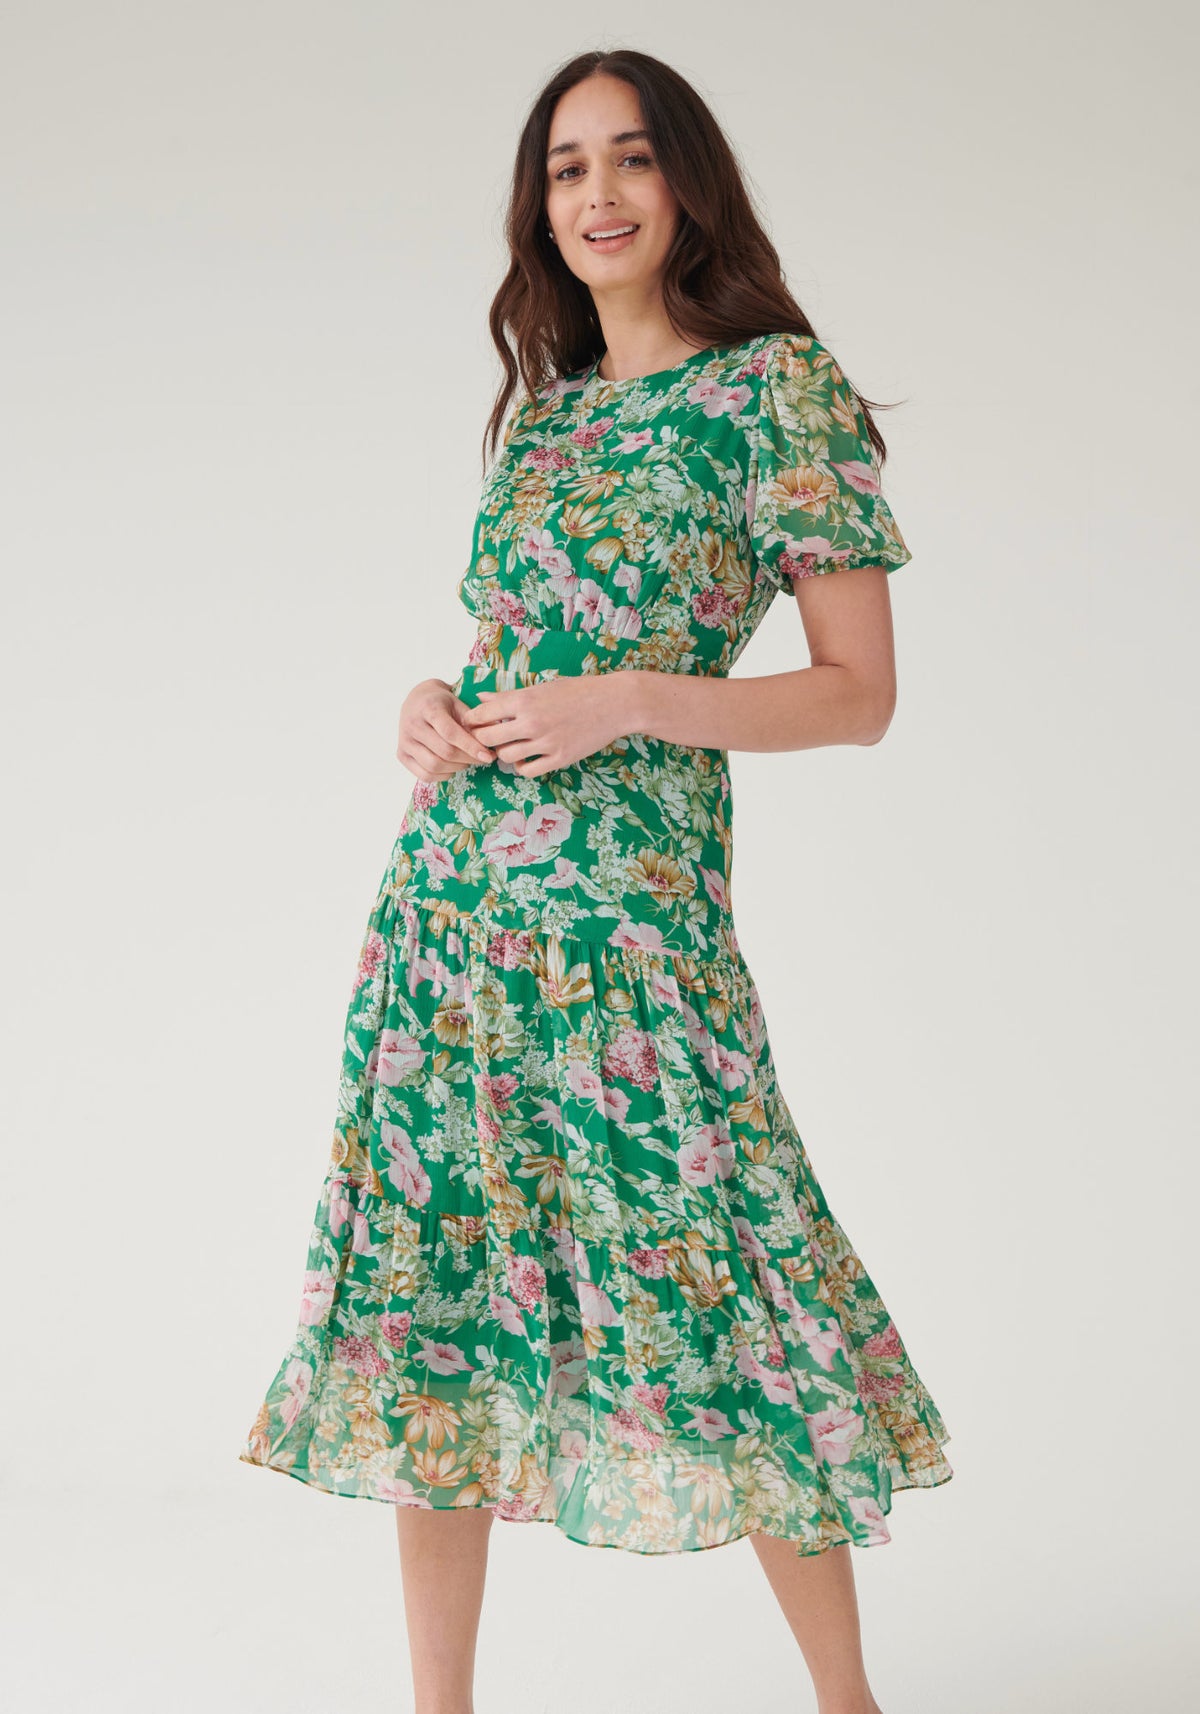 Green Floral Christening Dress - Christening Dresses for Women - Green and pink floral dress for women UK